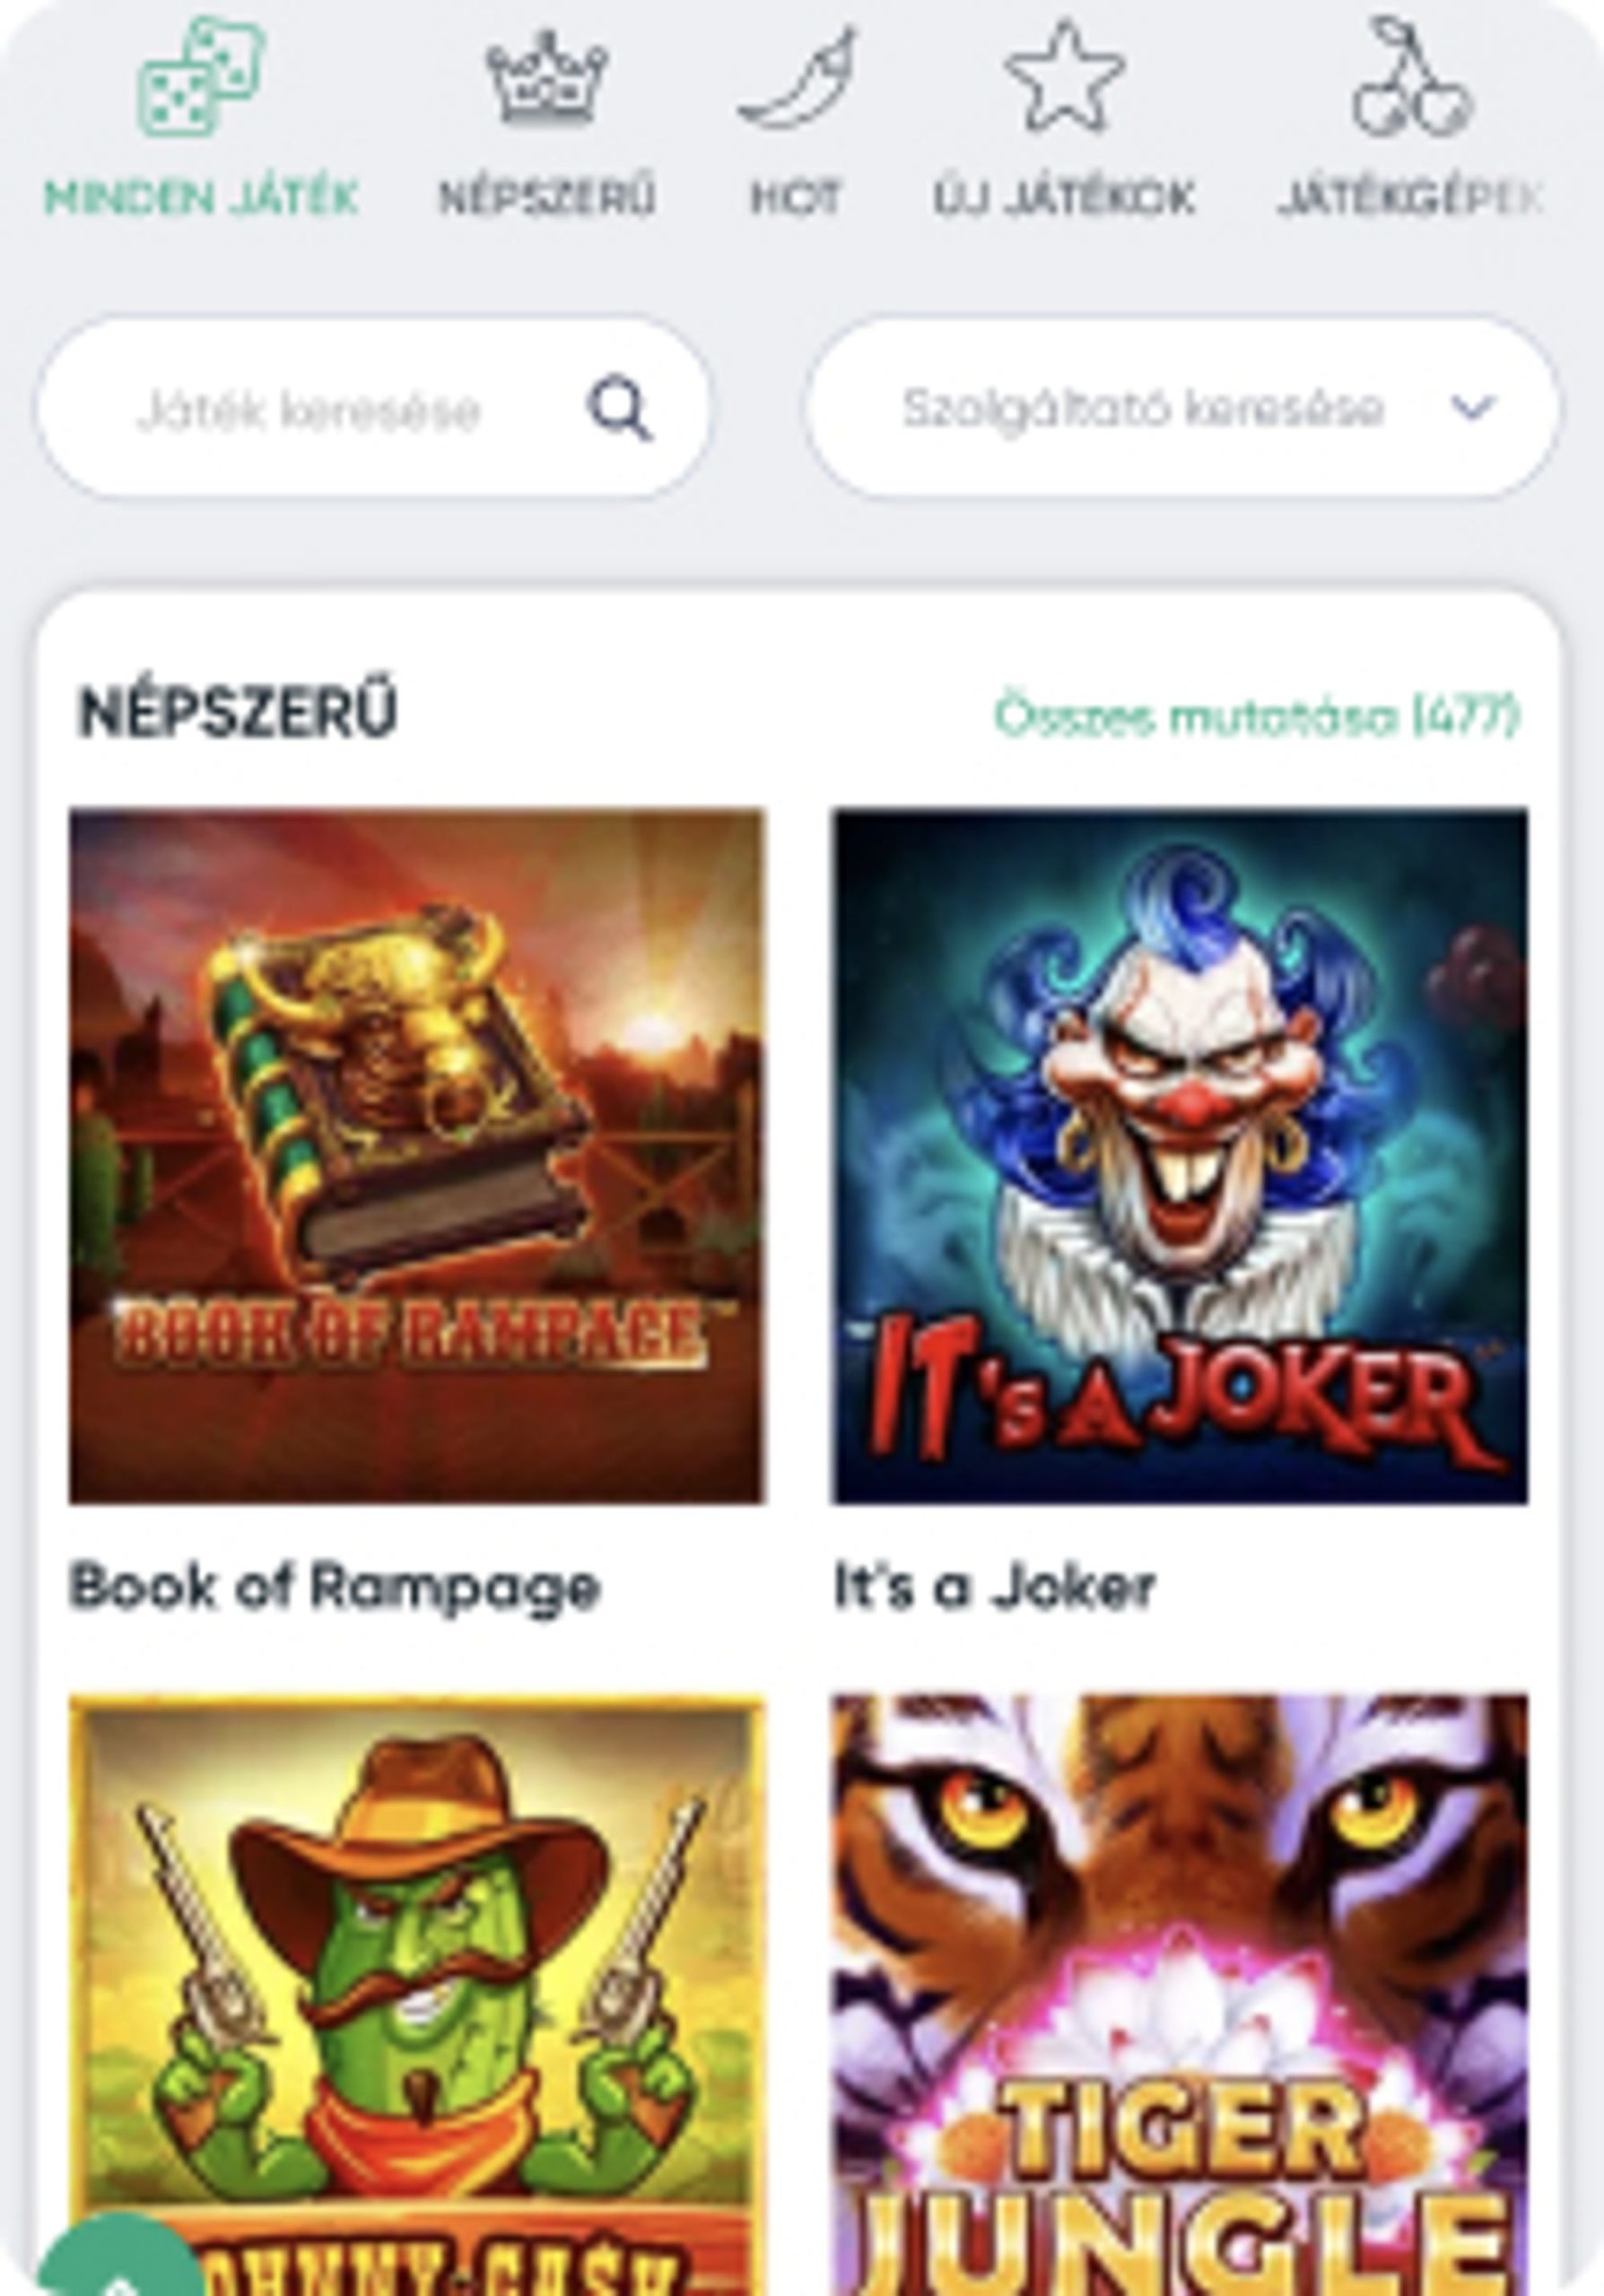 ivibet casino mobile screenshot - games lobby